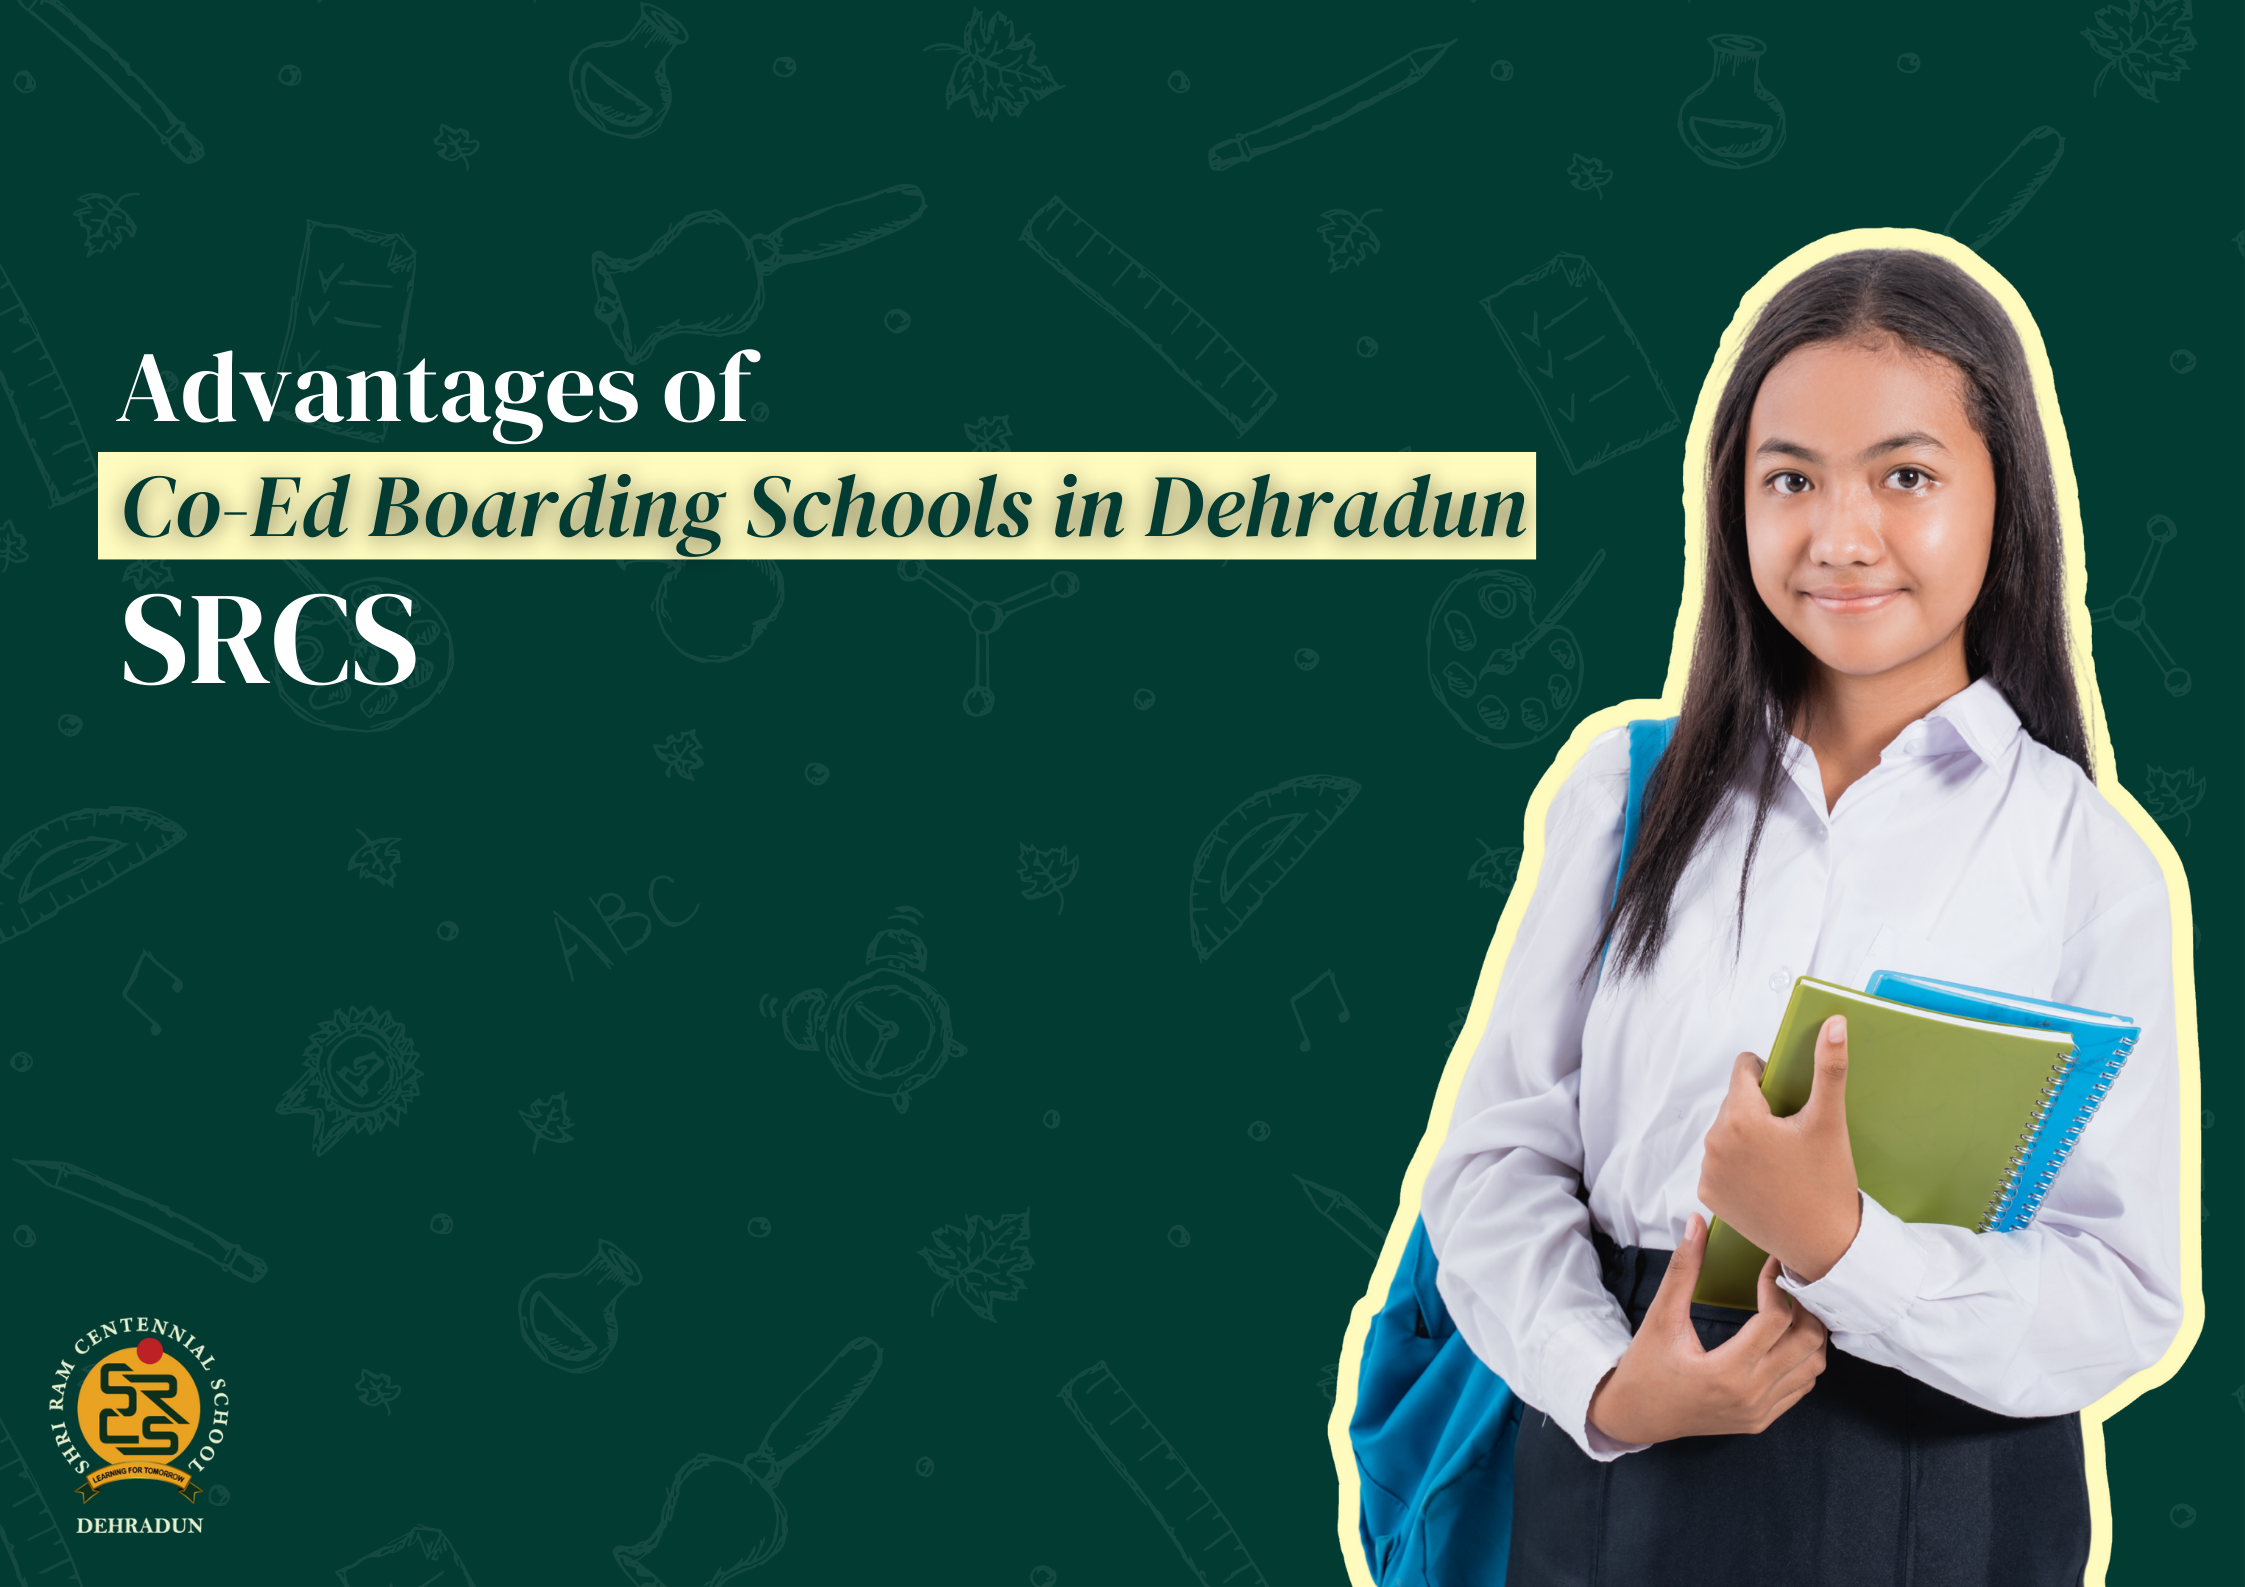 The Advantages of Co-Ed Boarding Schools in Dehradun